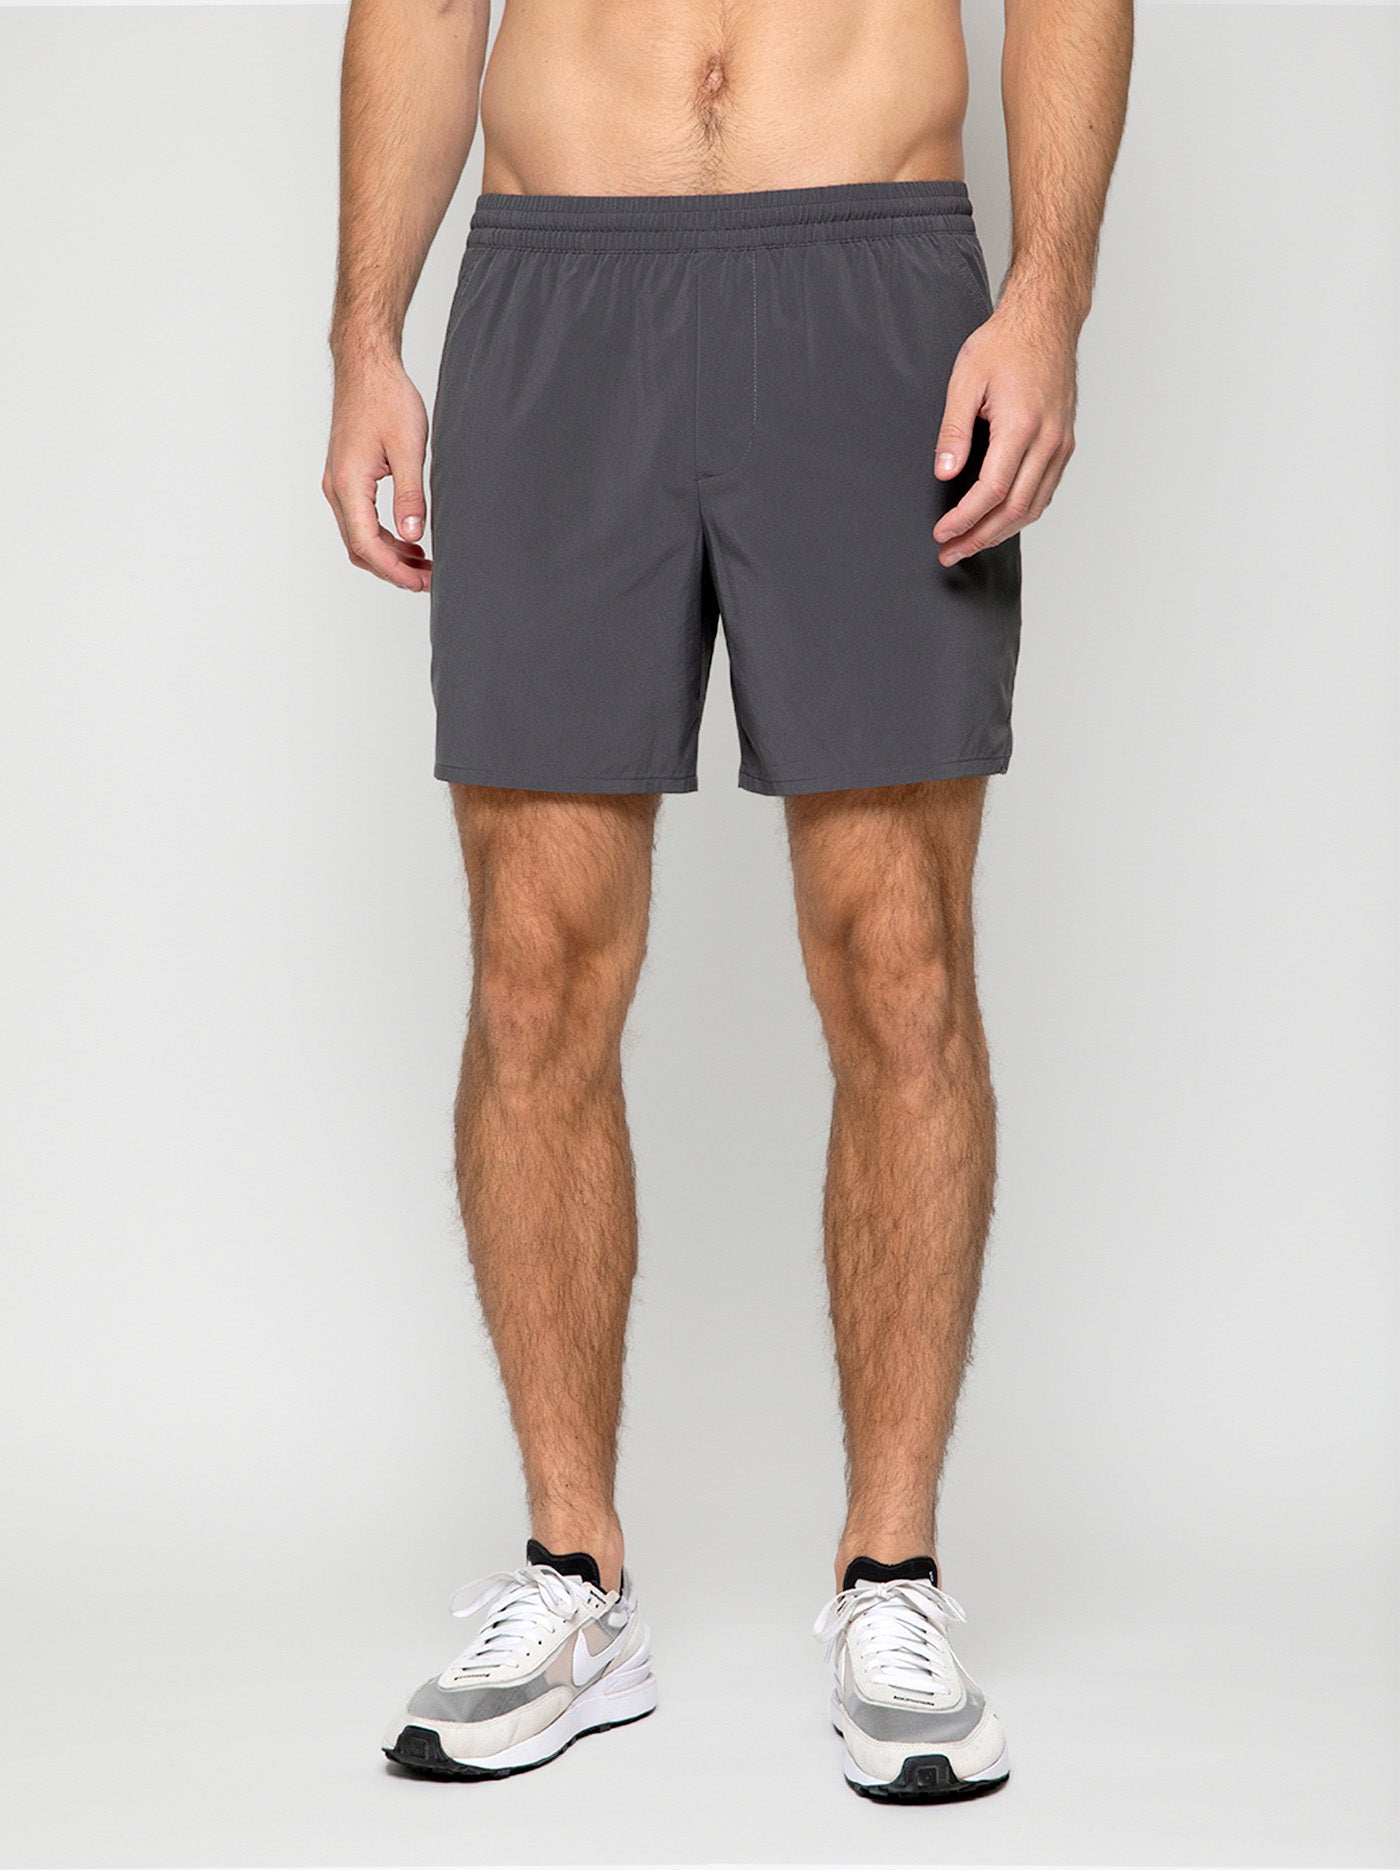 Endure Short: 6 inch Men\'s Shorts - Inseam Fourlaps